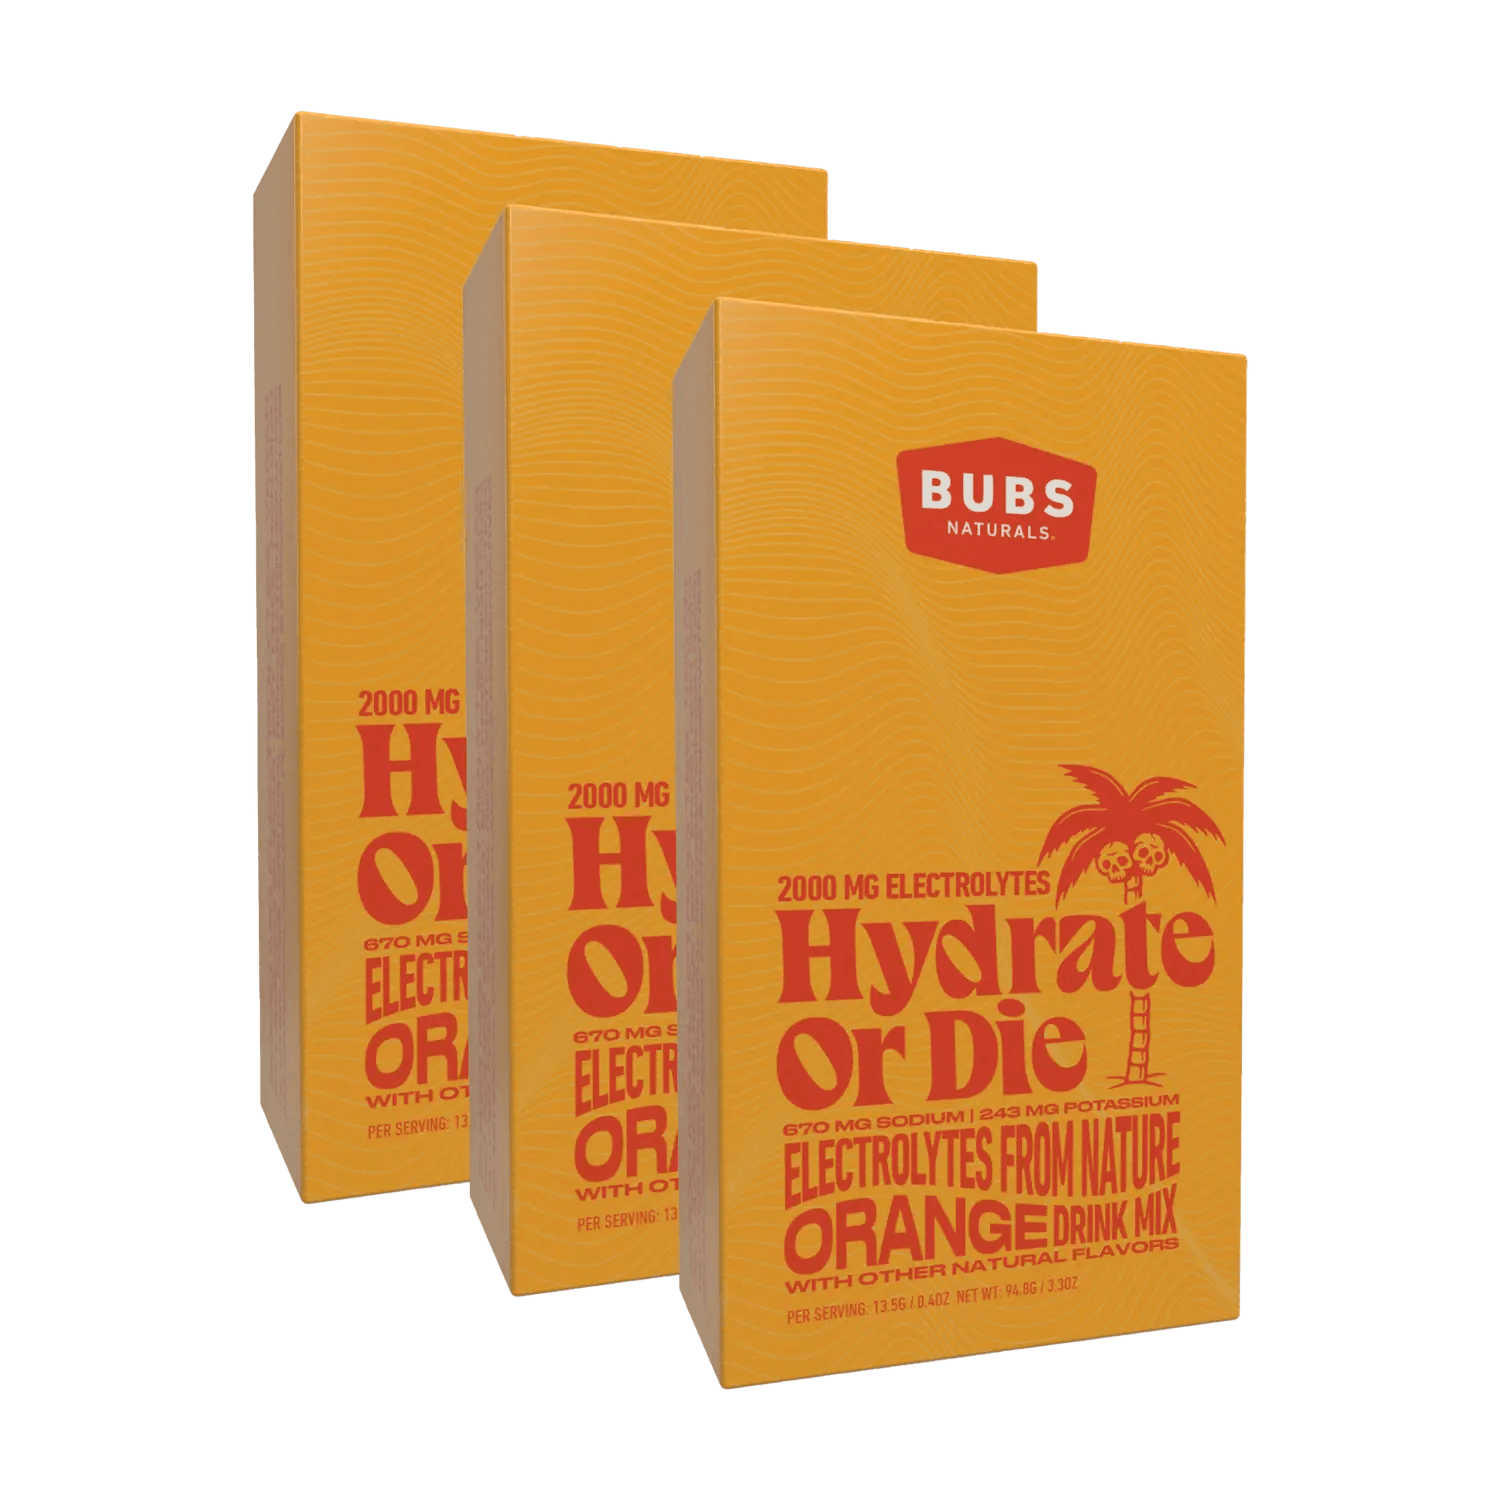 BUBS Naturals Hydrate or Die Electrolyte Cartons, orange, bundle of 3